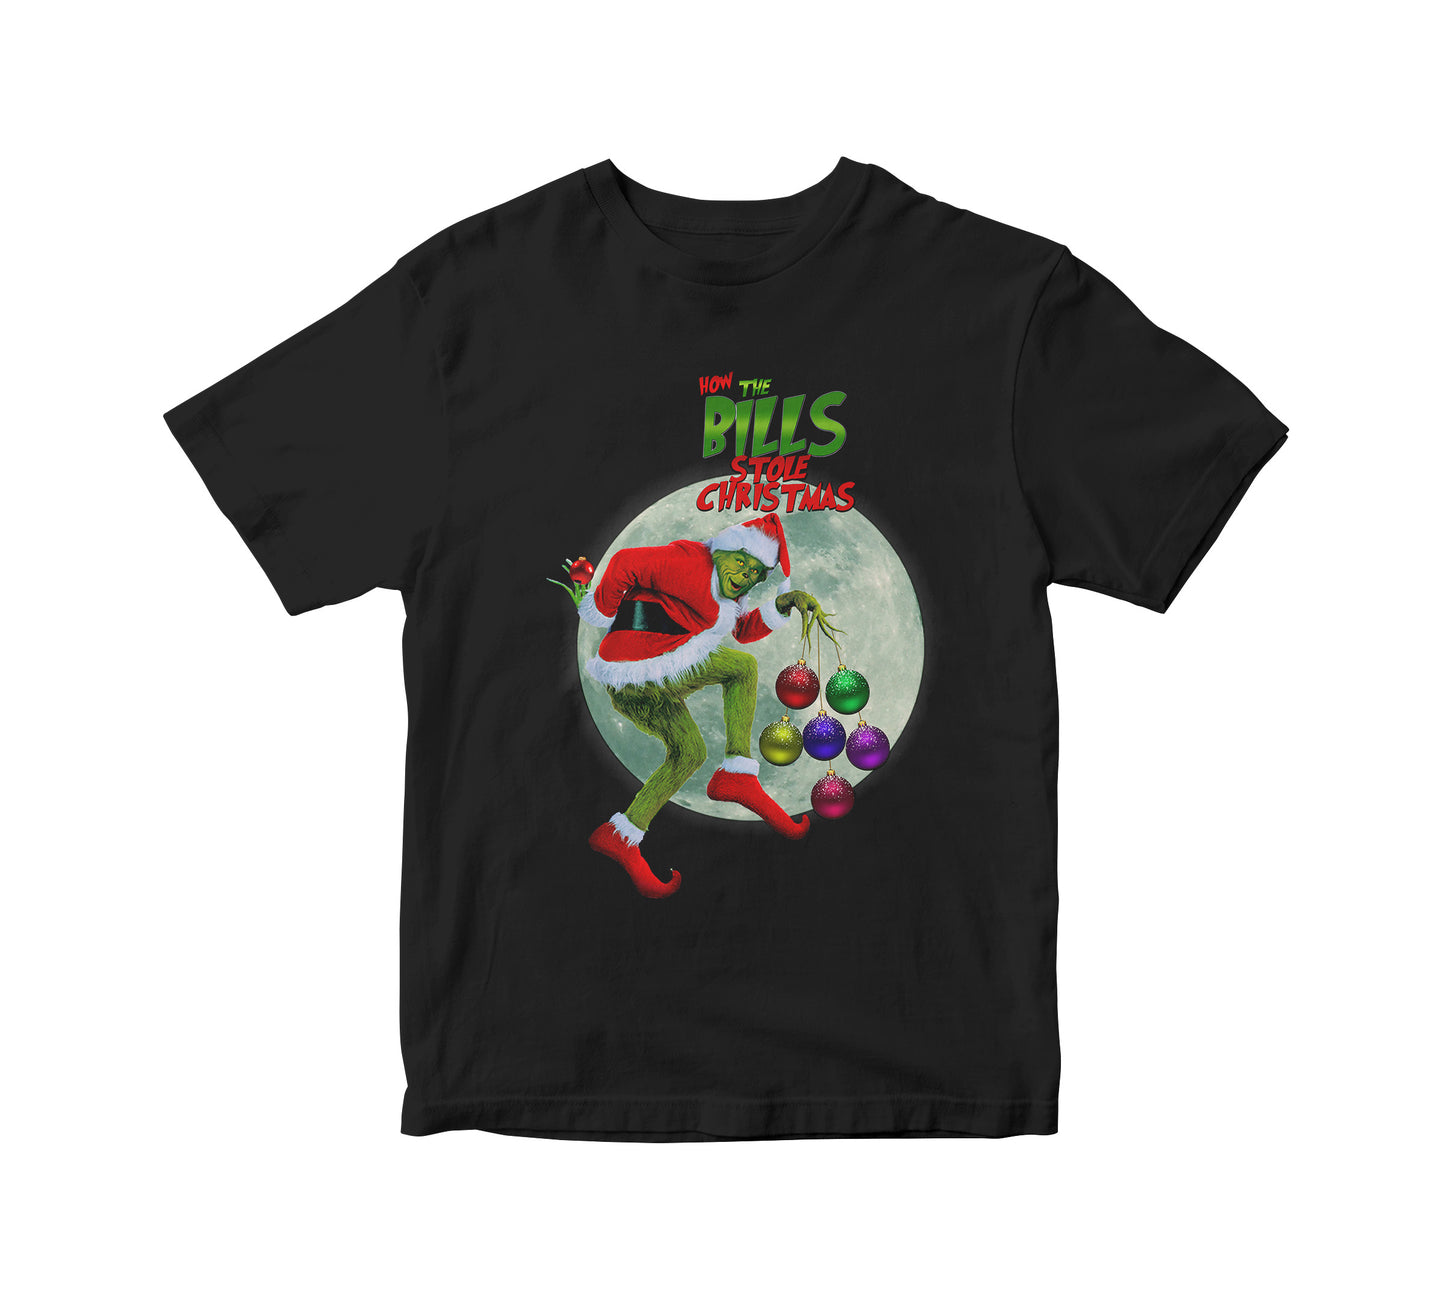 Bills Stole Christmas Adult Unisex T-Shirt